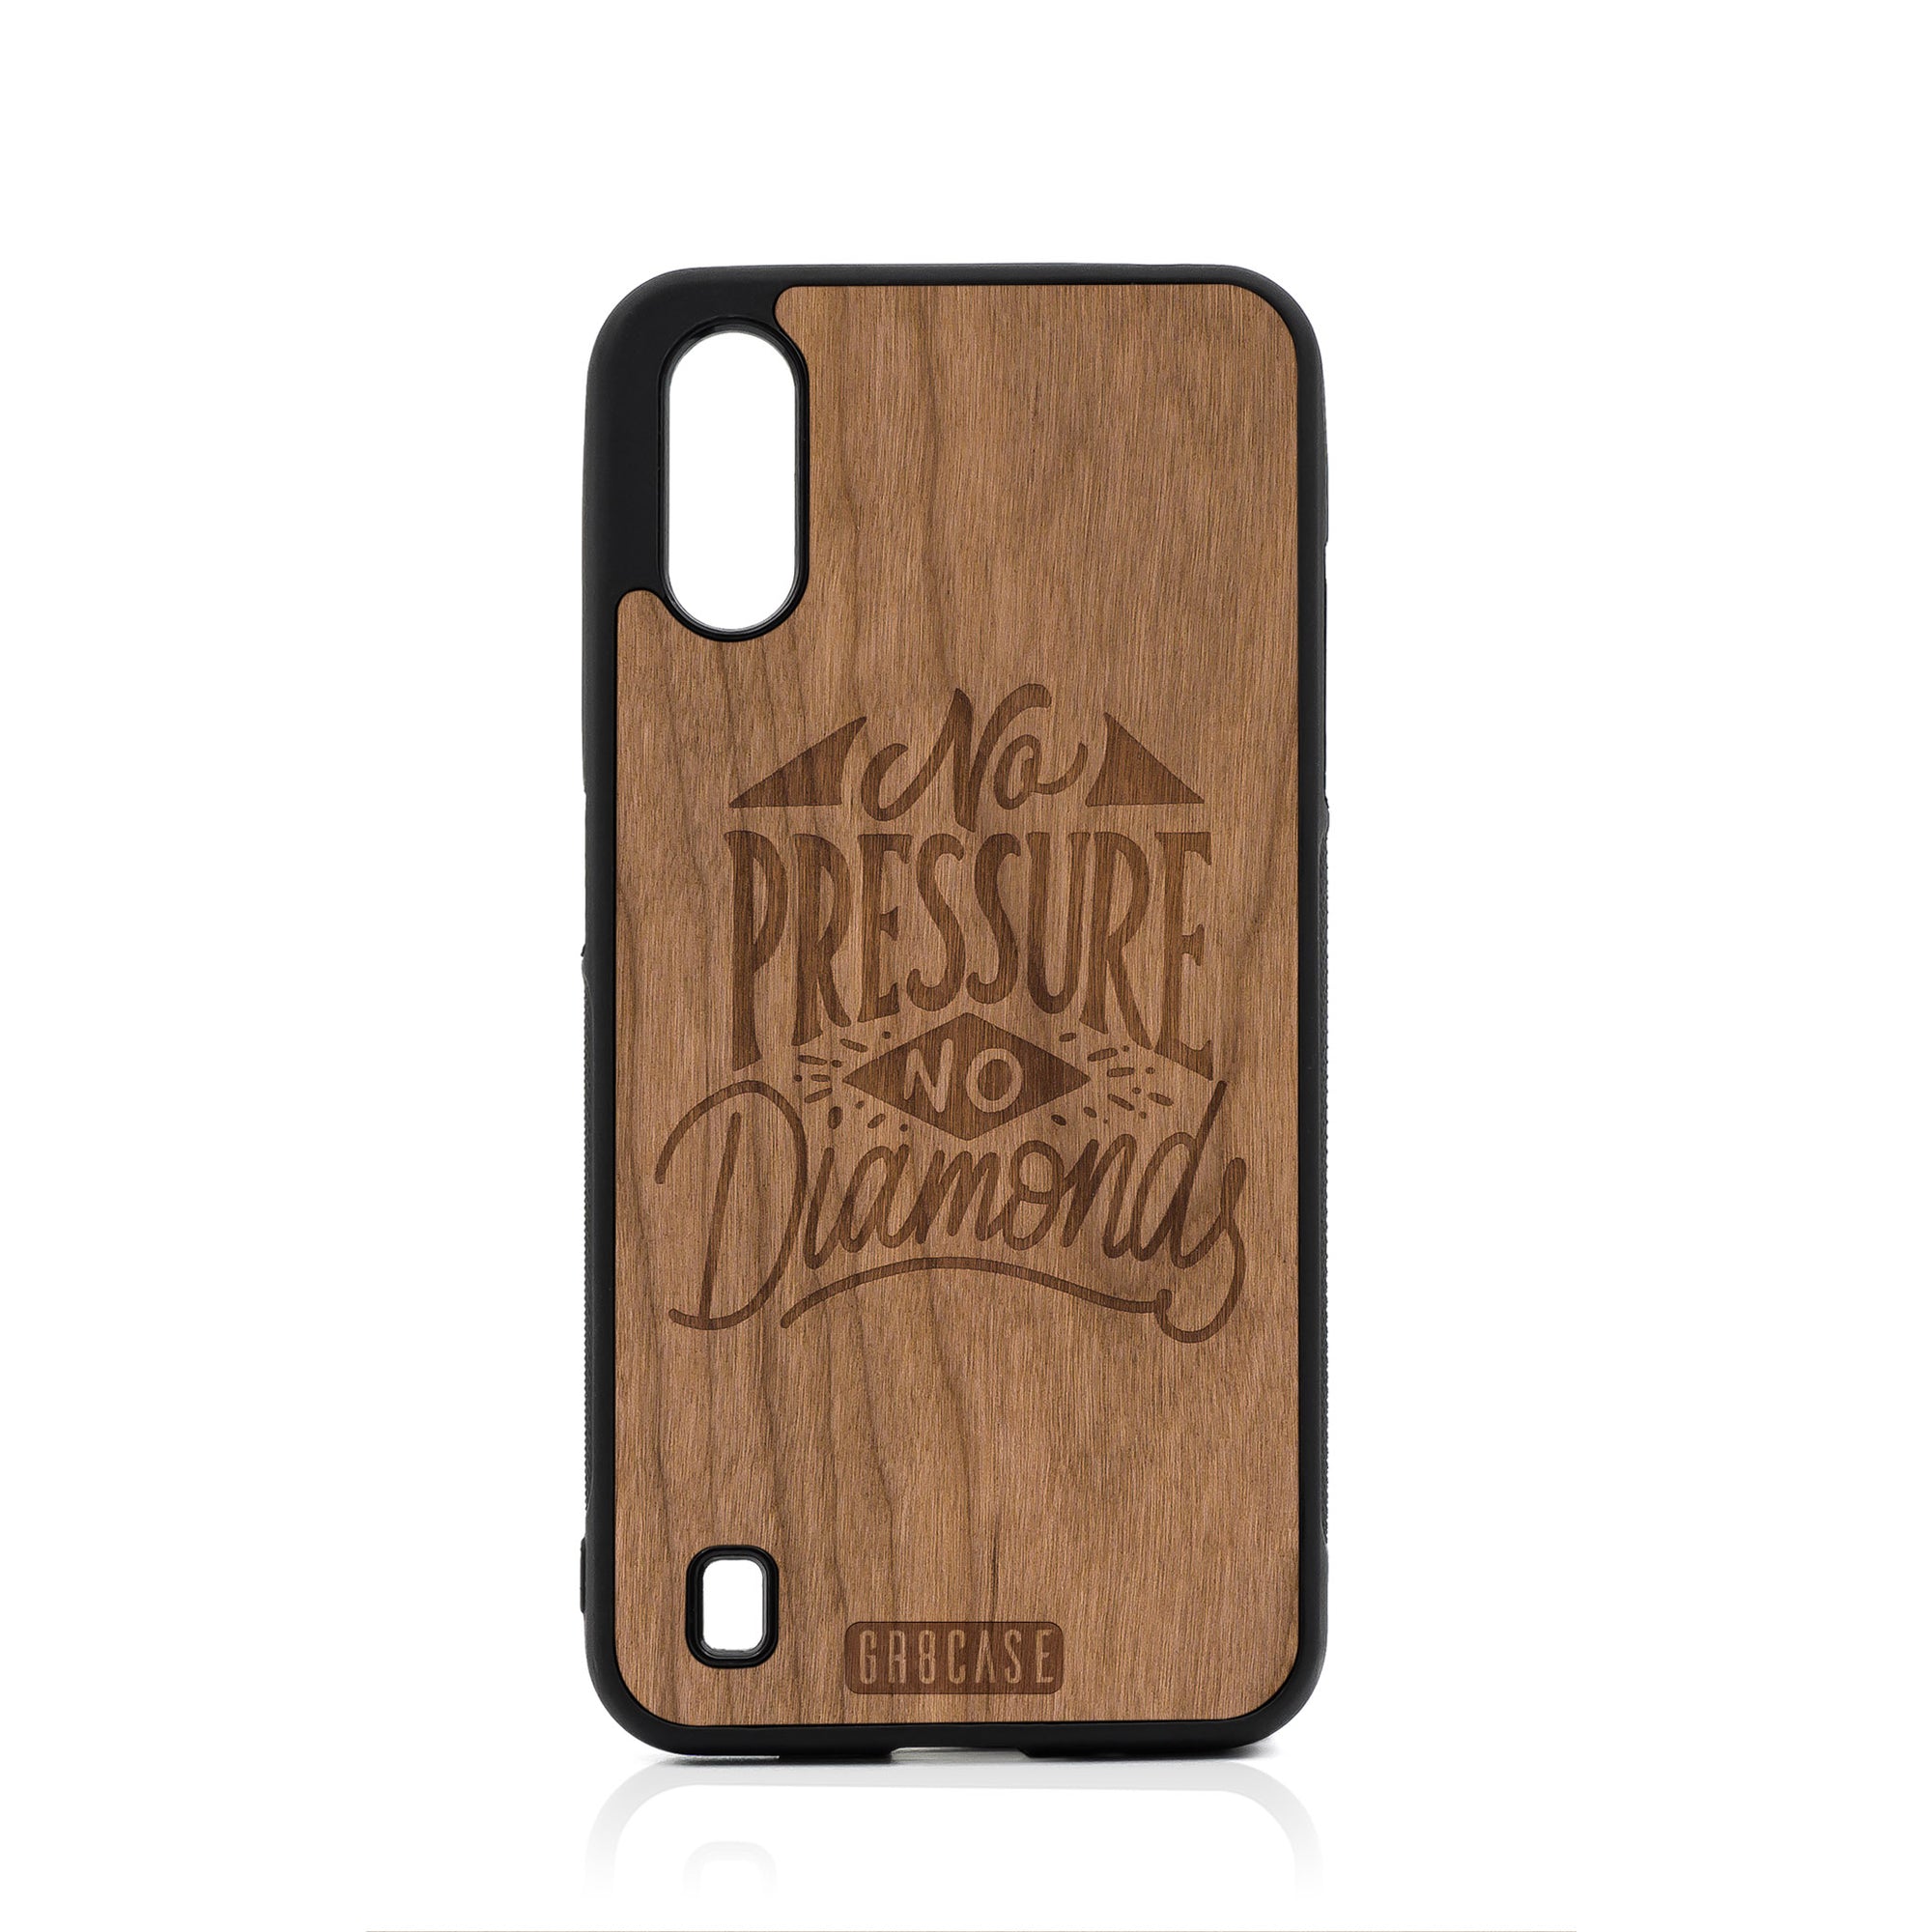 No Pressure No Diamonds Design Wood Case For Samsung Galaxy A01